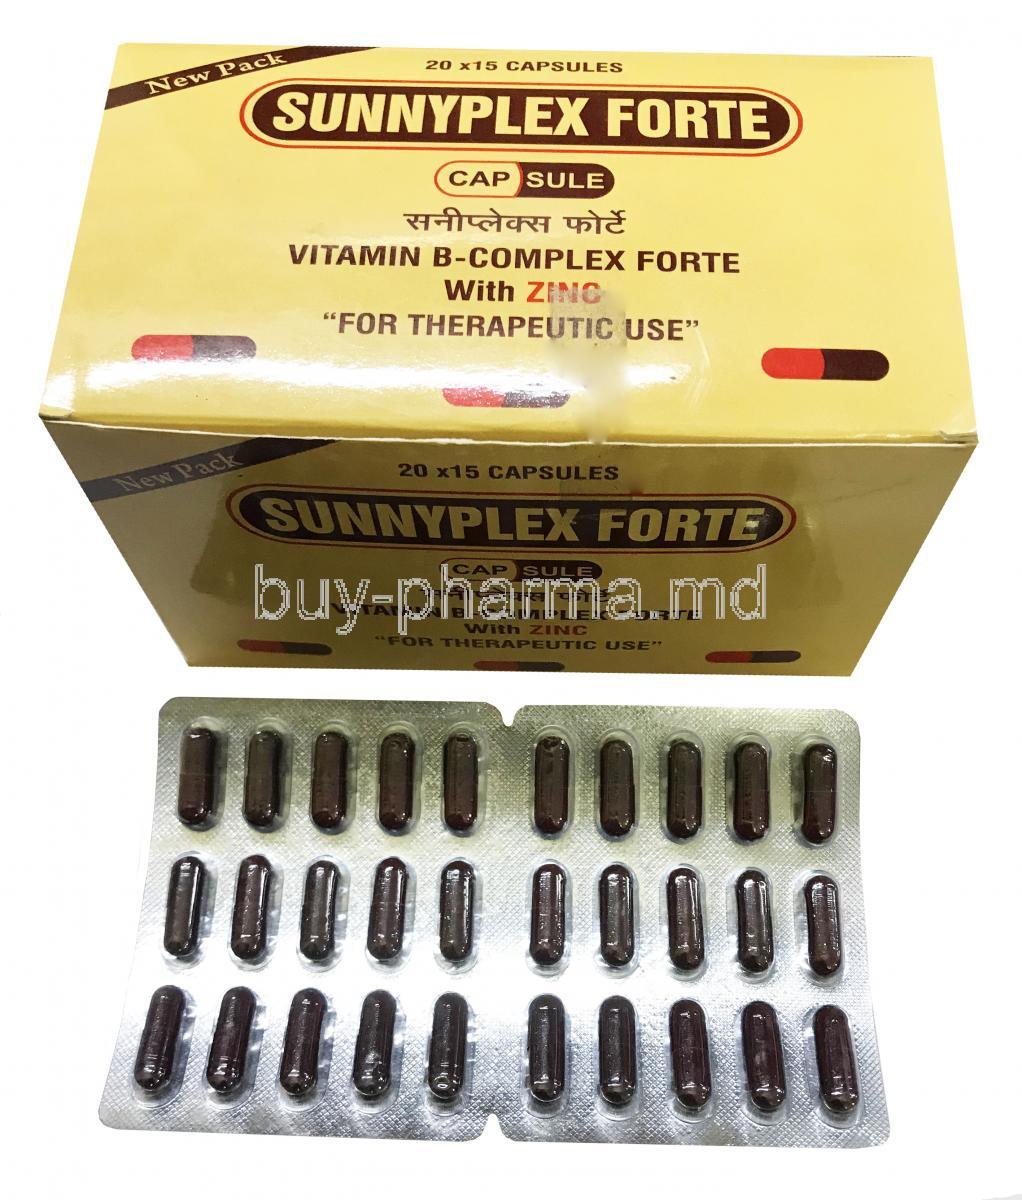 Sunnyplex Forte, Vitamin B1 10mg/ Vitamin B2 10mg/ Vitamin B6 3mg/ Vitamin B12 5mcg/ Niacinamide 50mg/ Calcium Pantothenate 12.5mg/ Zinc Sulphate Monohydrate 20mg/ Magnesium Sulphate Monohydrate 10mg, Saint Michael Biotech, box and blister pack